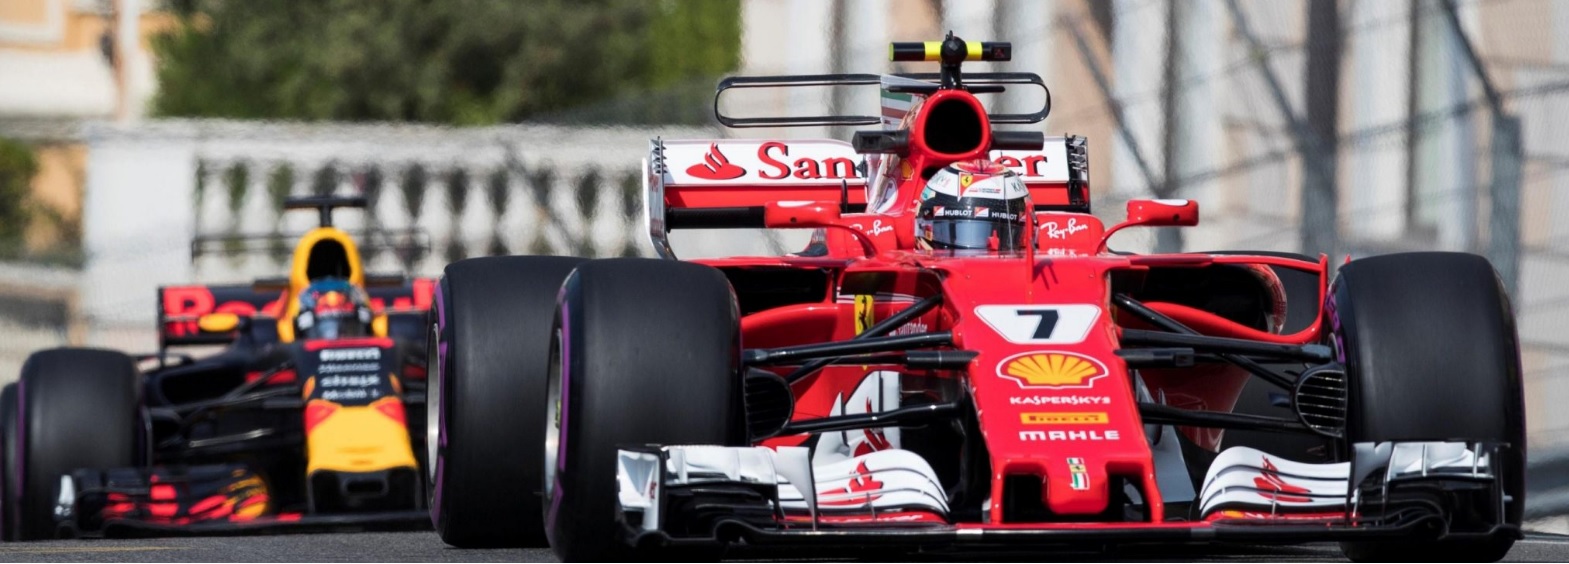 Ferrari domina Montecarlo. Kimi y Vettel primeros; Hamilton sale en la posición 14